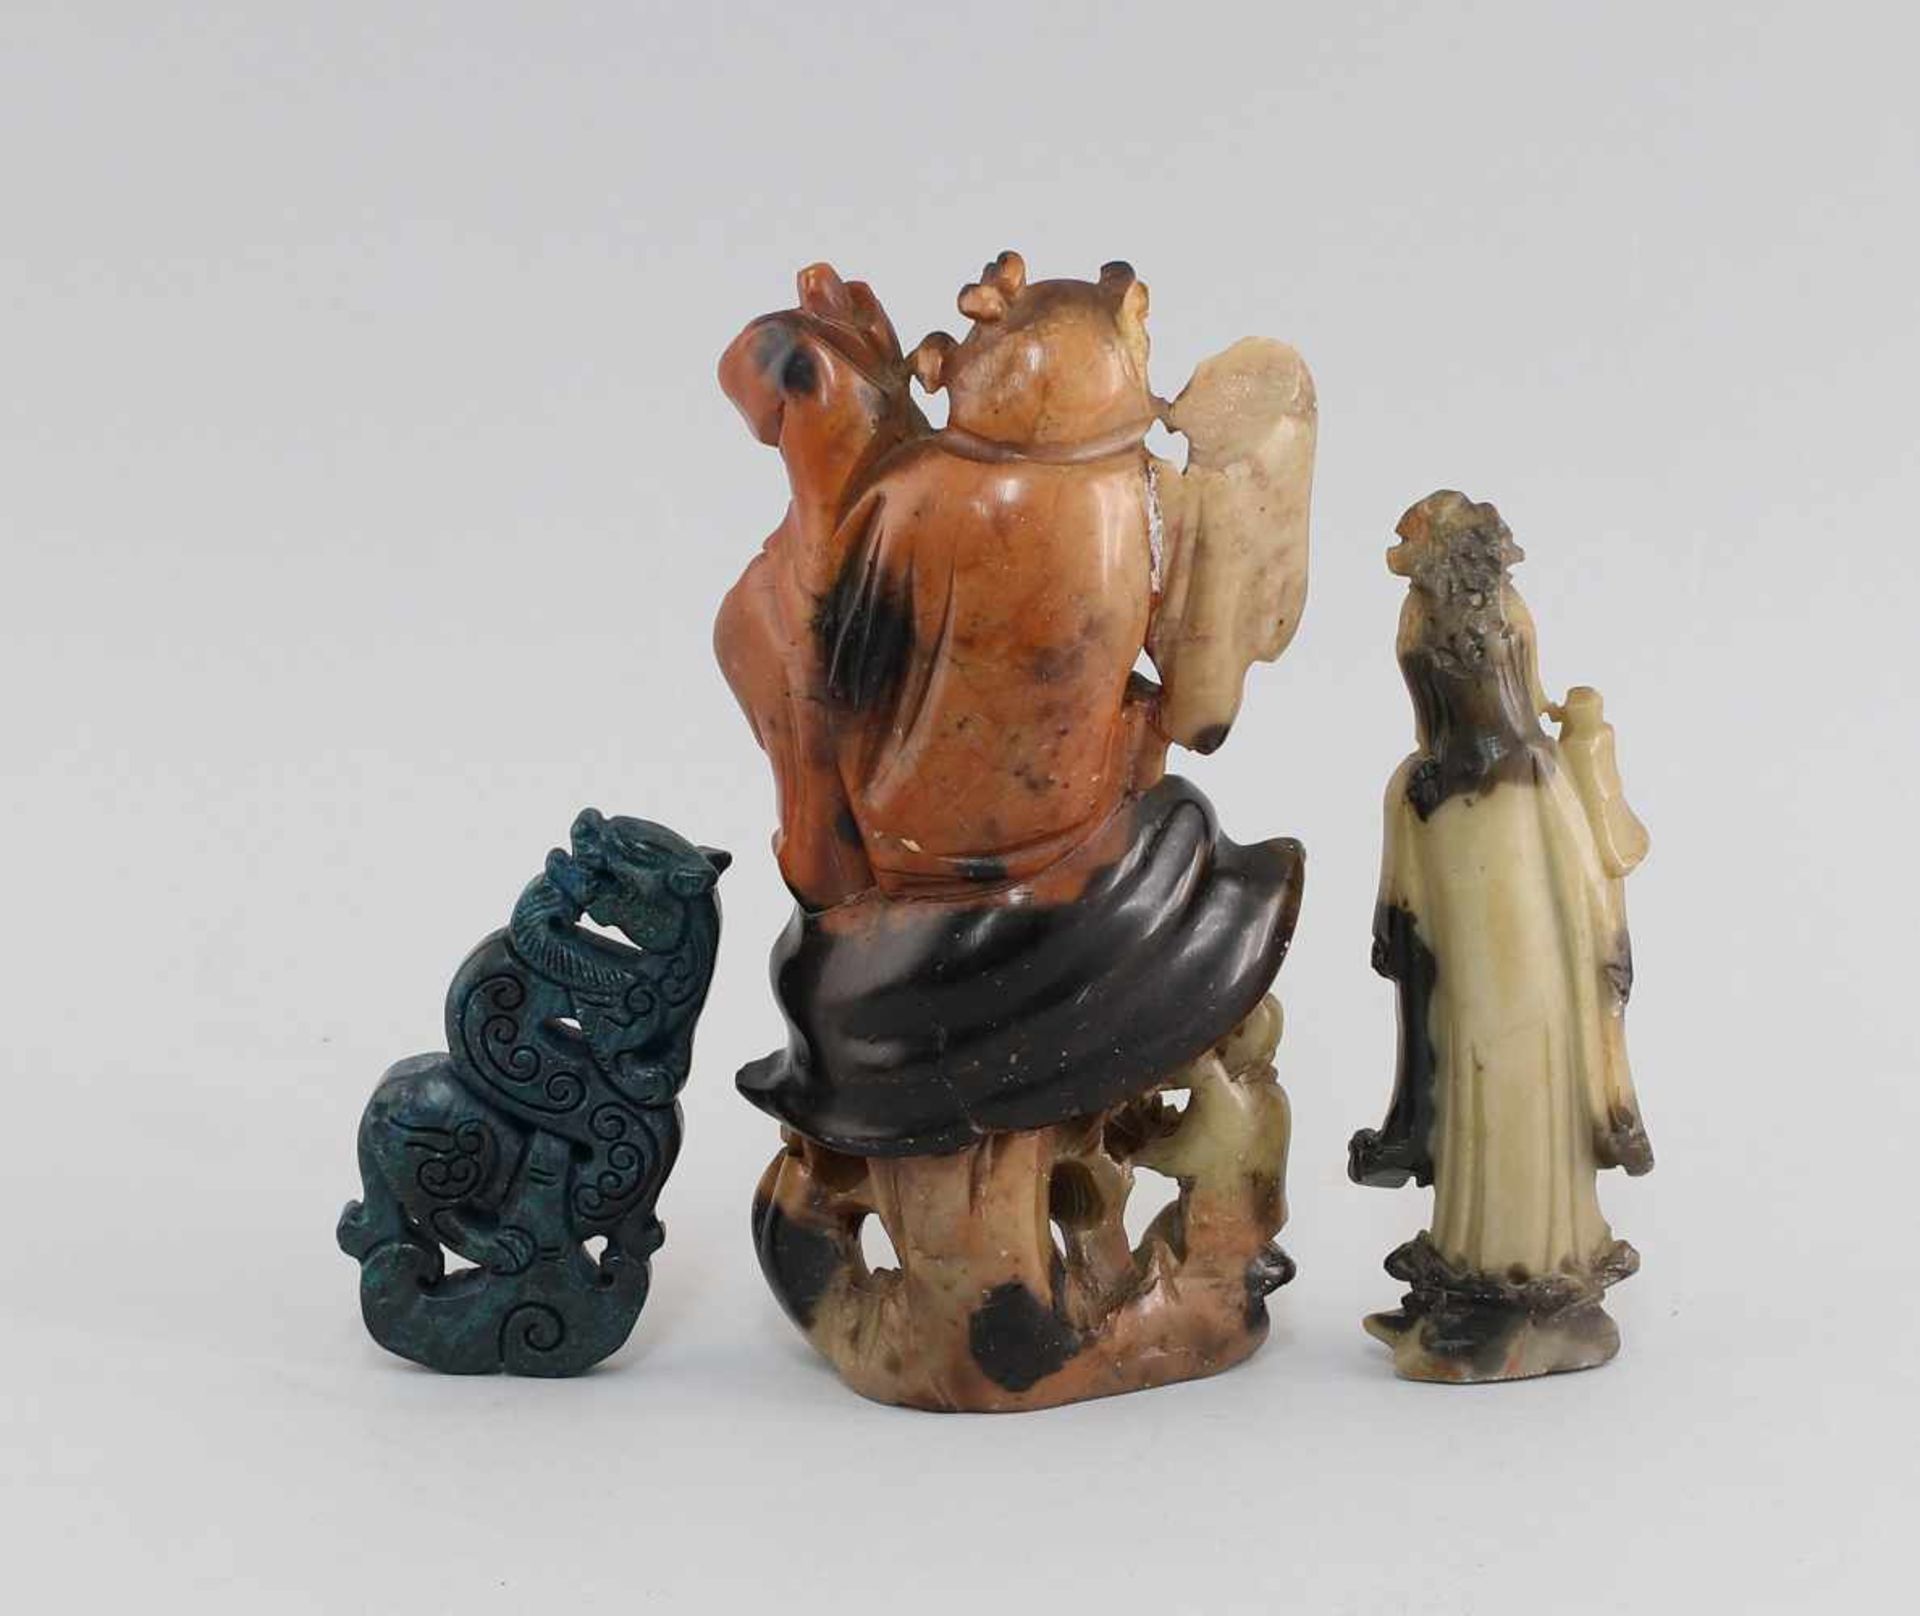 3 geschnitzte FigurenChina/Japan, 20. Jh., dabei Fabelwesen-Netsuke, wohl Jade, 8 x 4,5 cm, - Bild 2 aus 3